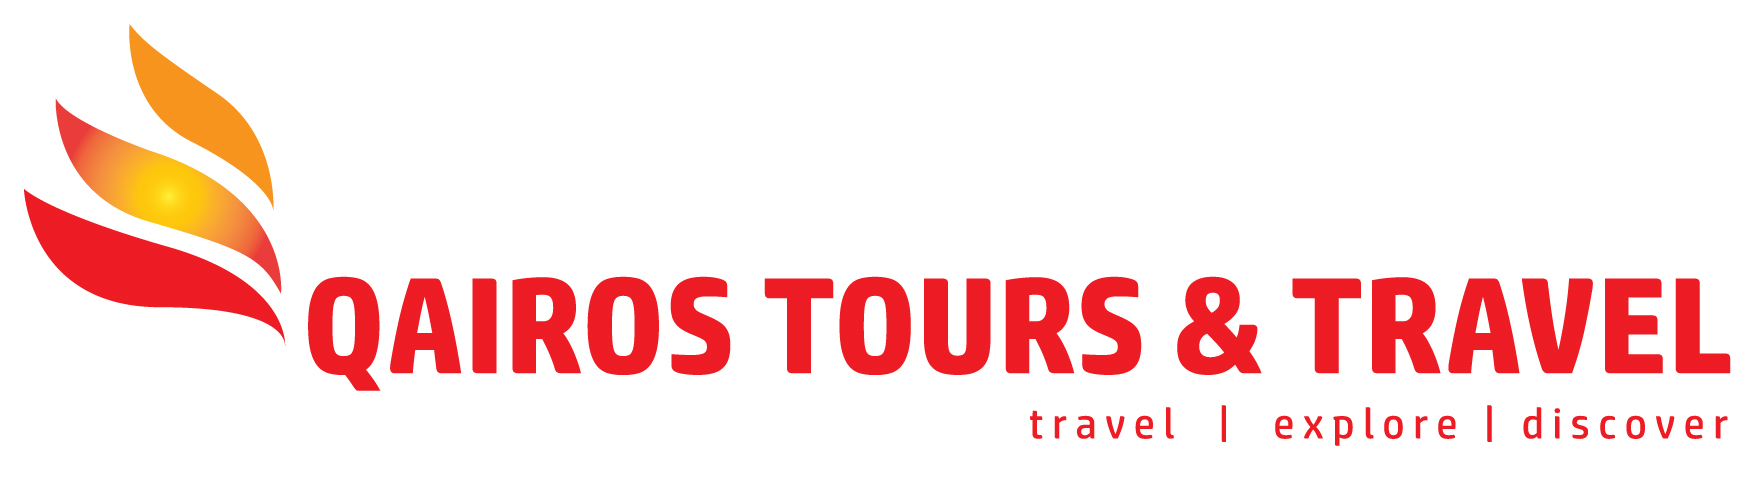 Qairos Tours and Travel..